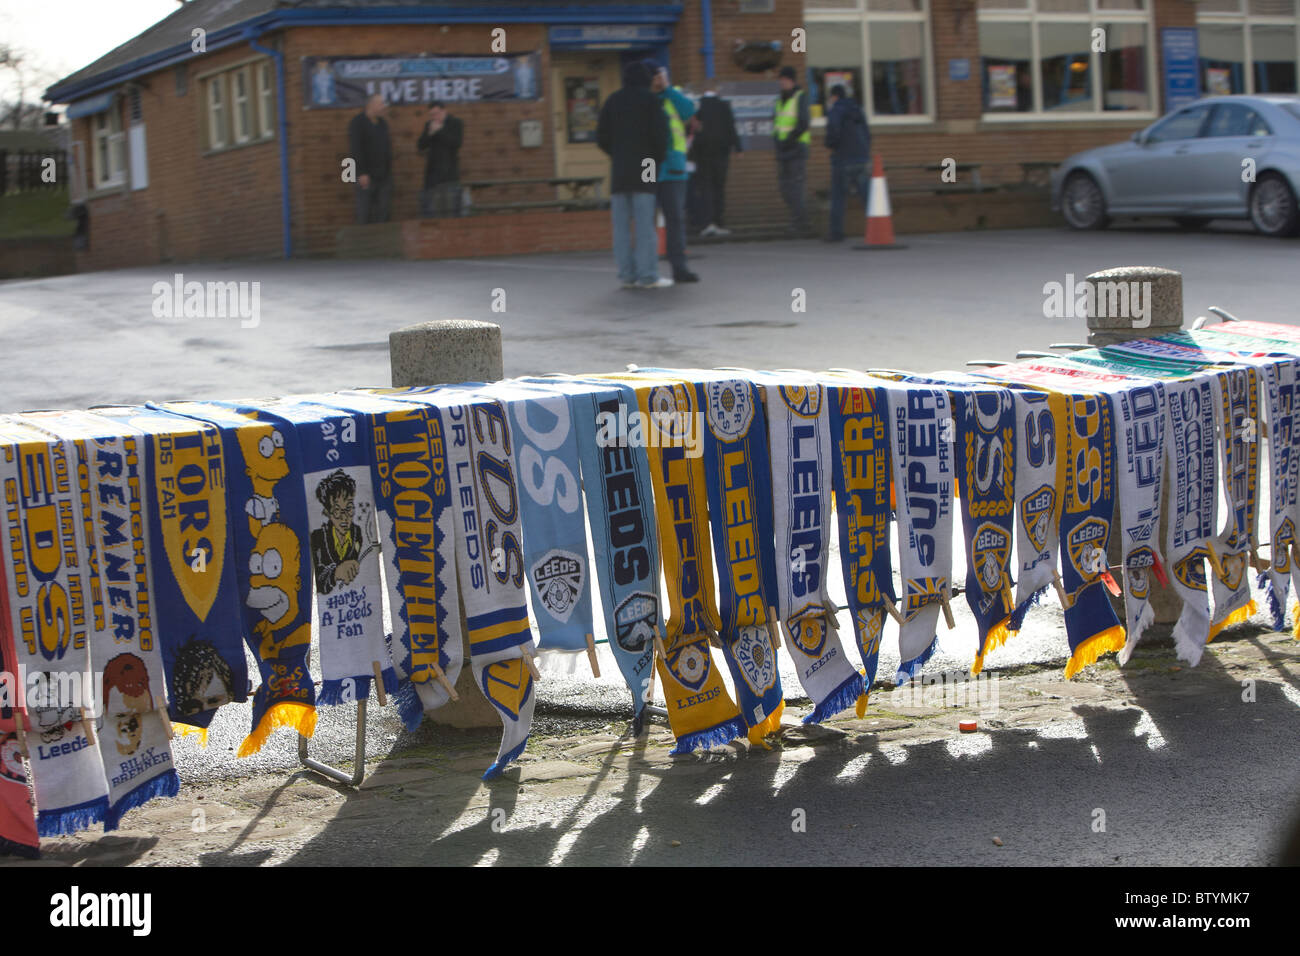 Fans scarfs on table for a Leeds Utd football game Stock Photo